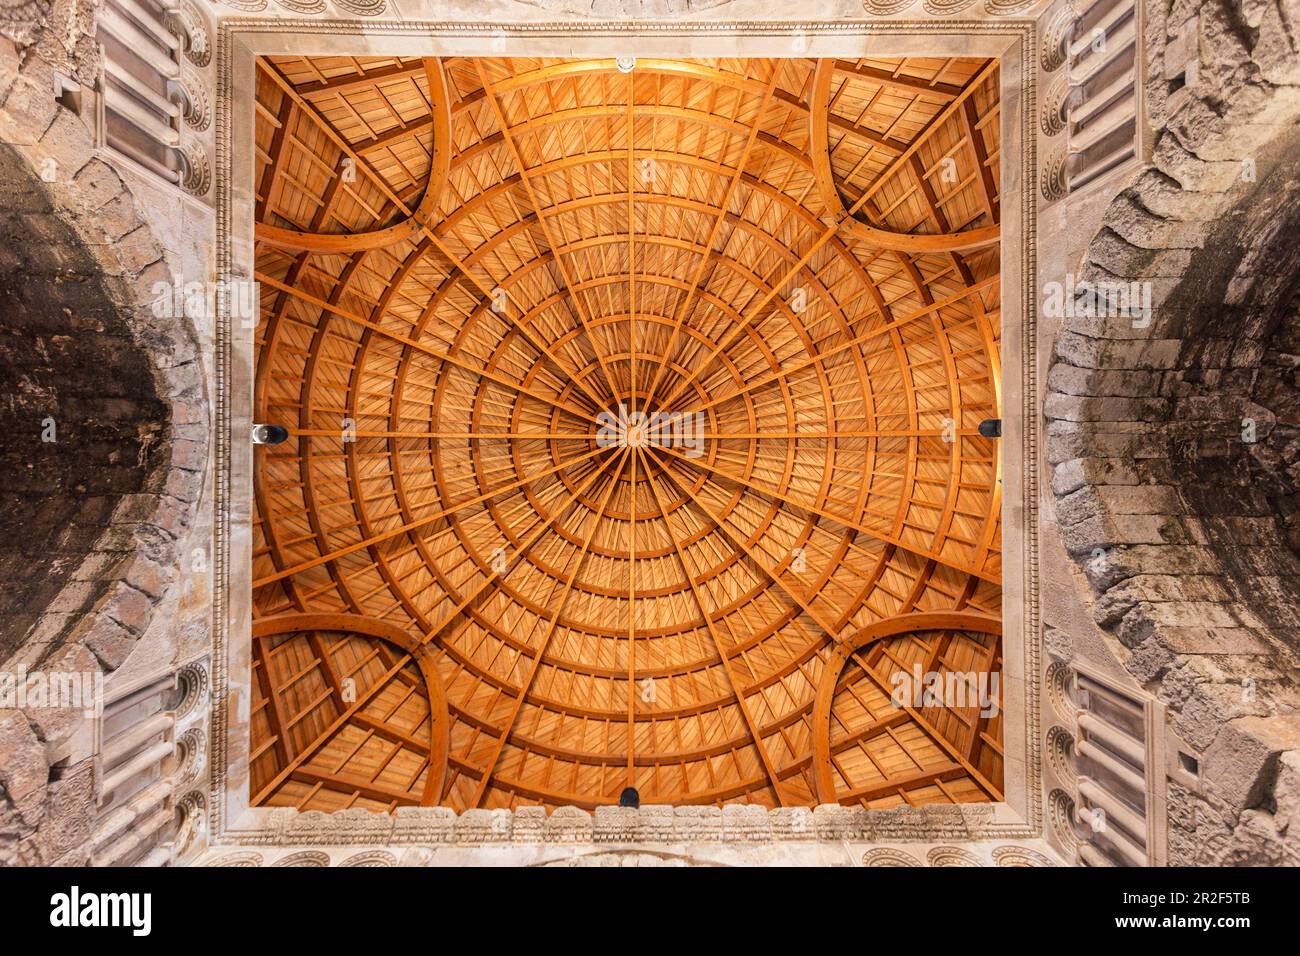 The roof of the Umayyad Palace in Amman, Jordan Stock Photo